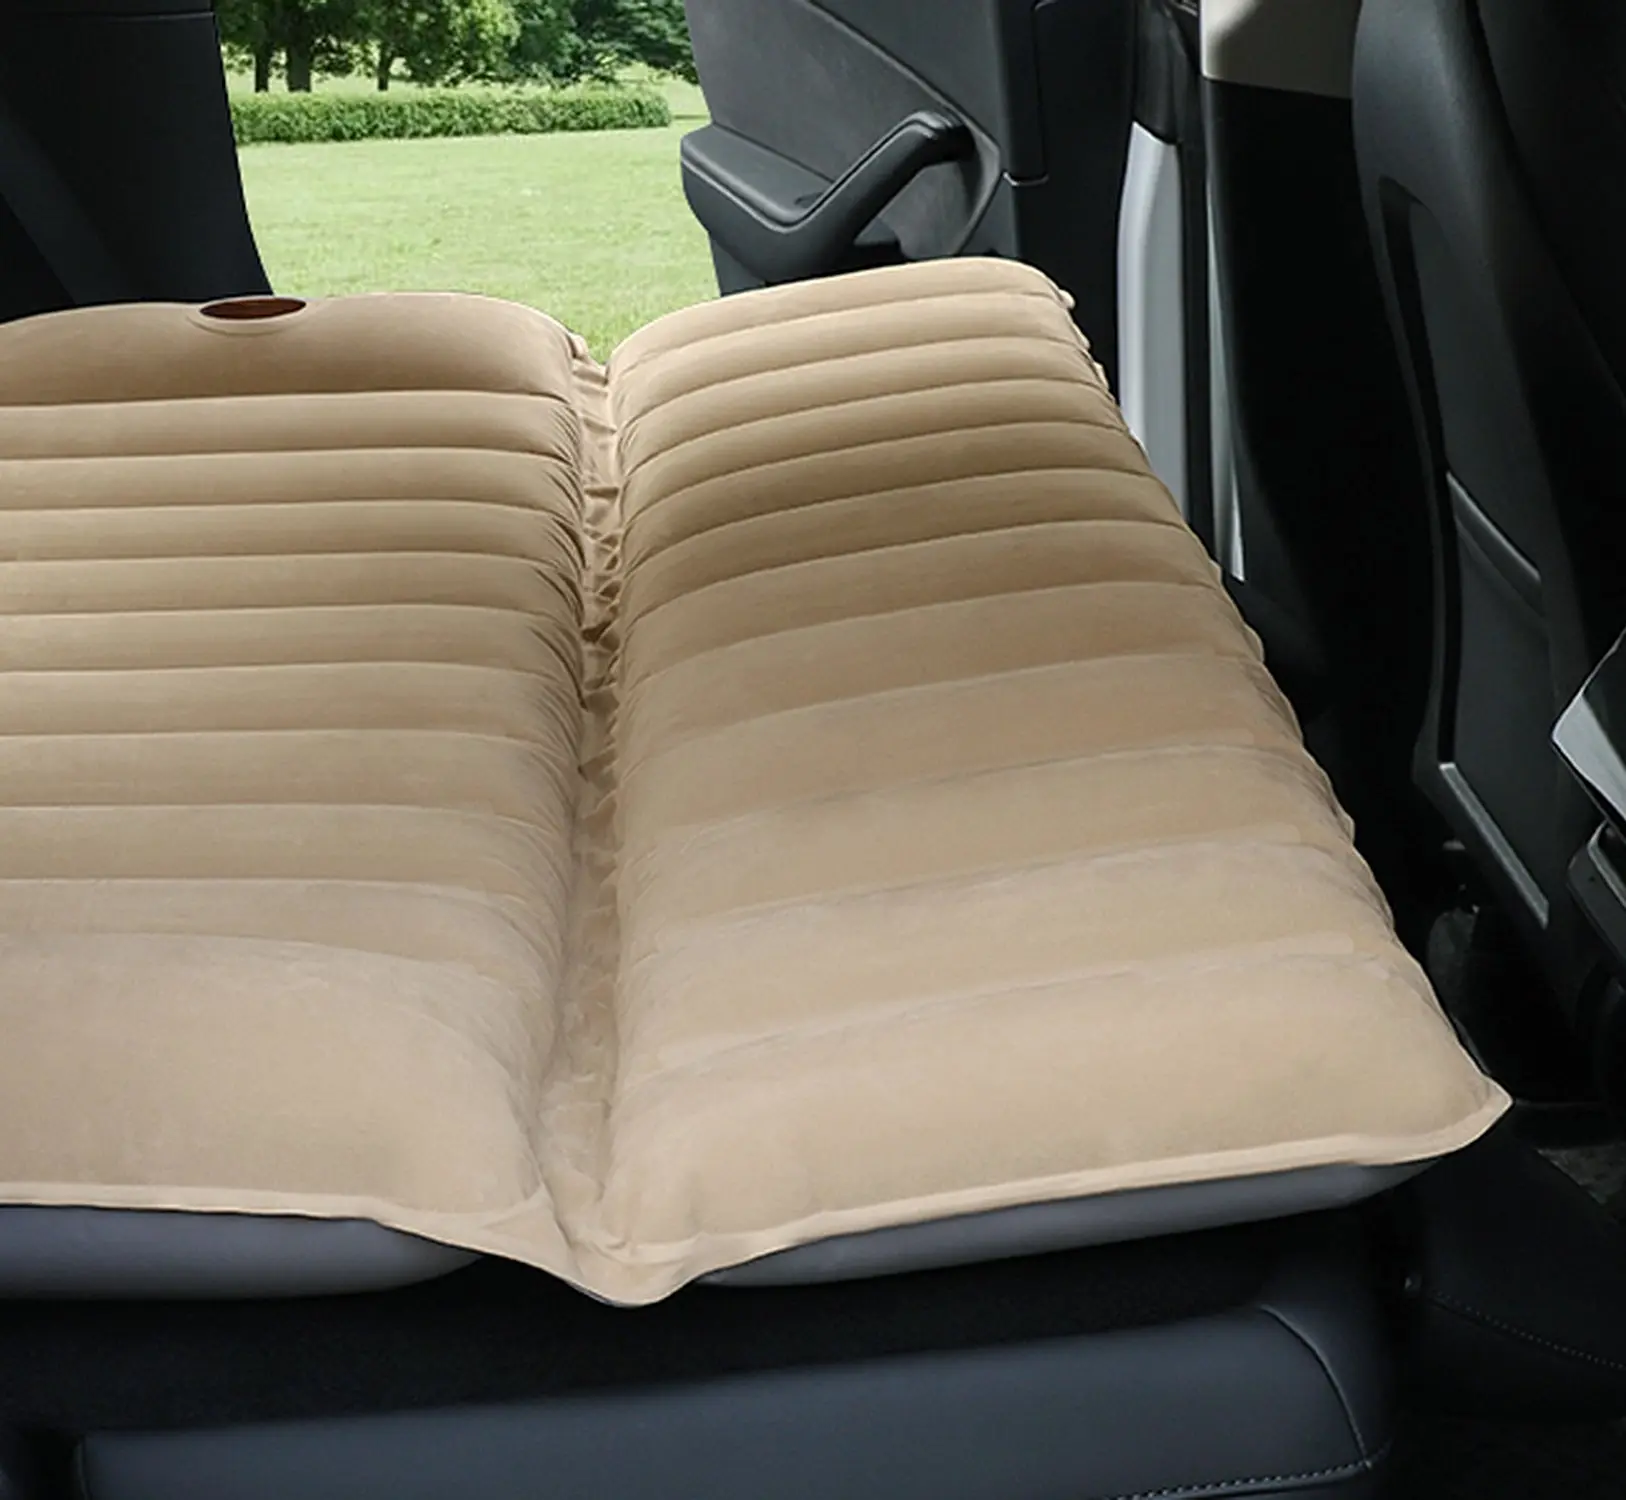 Adreama Tesla Model 3/Y Self-Inflating Air Mattress: Ultimate Comfort for Road Trips